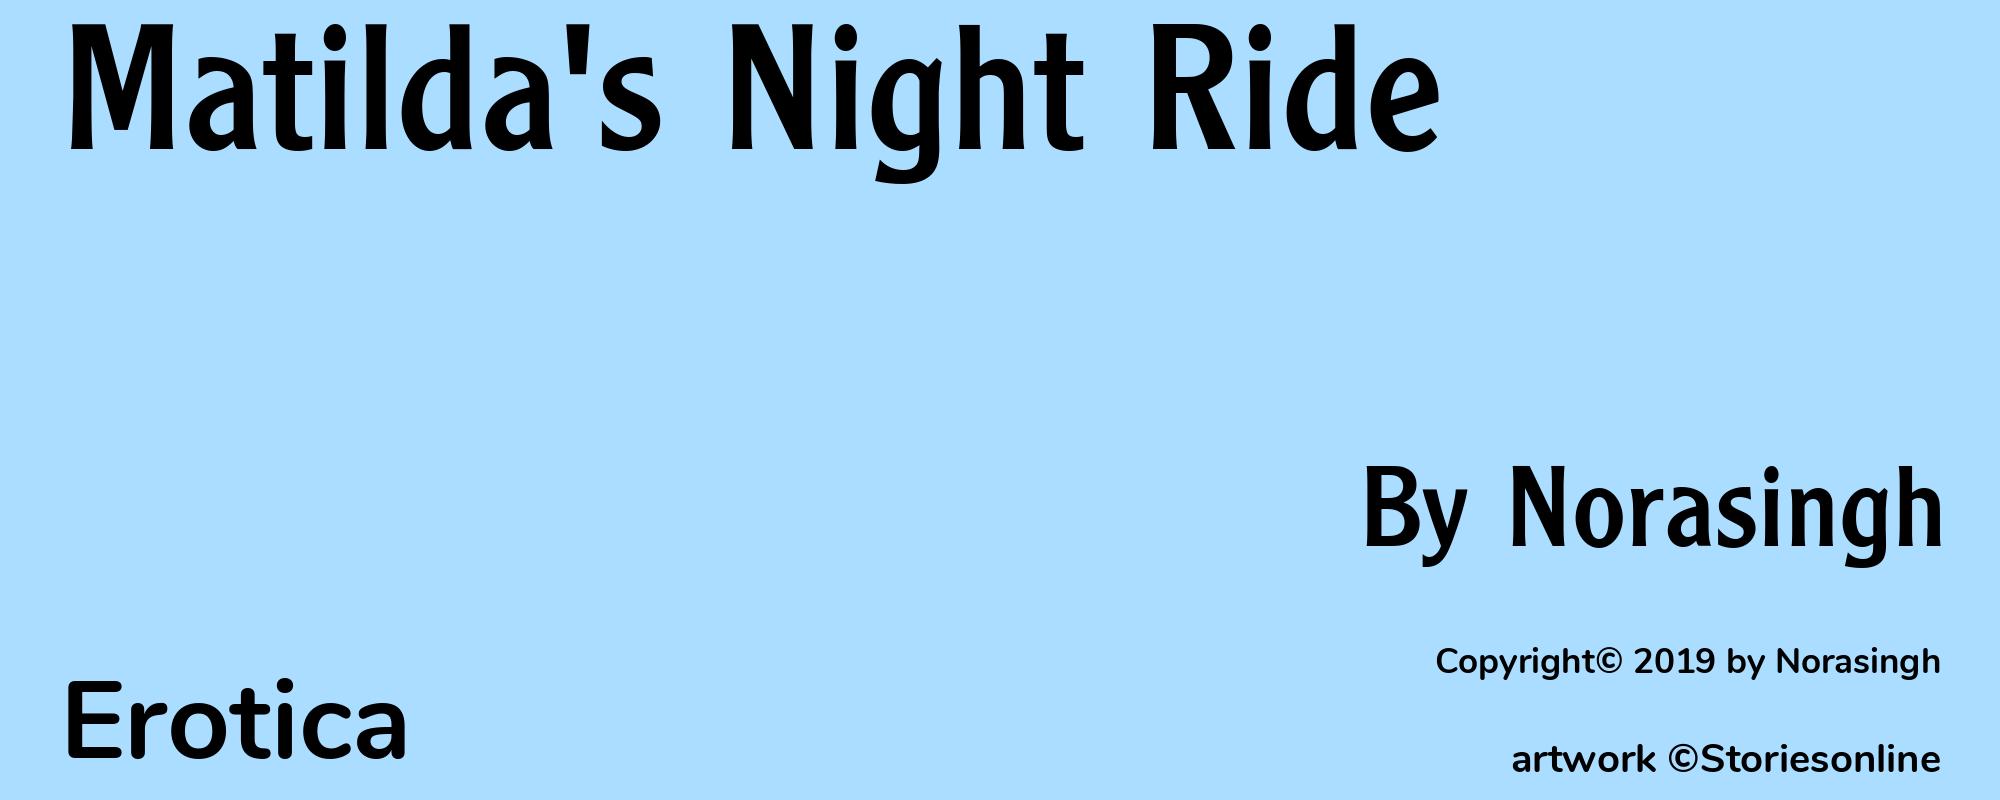 Matilda's Night Ride - Cover